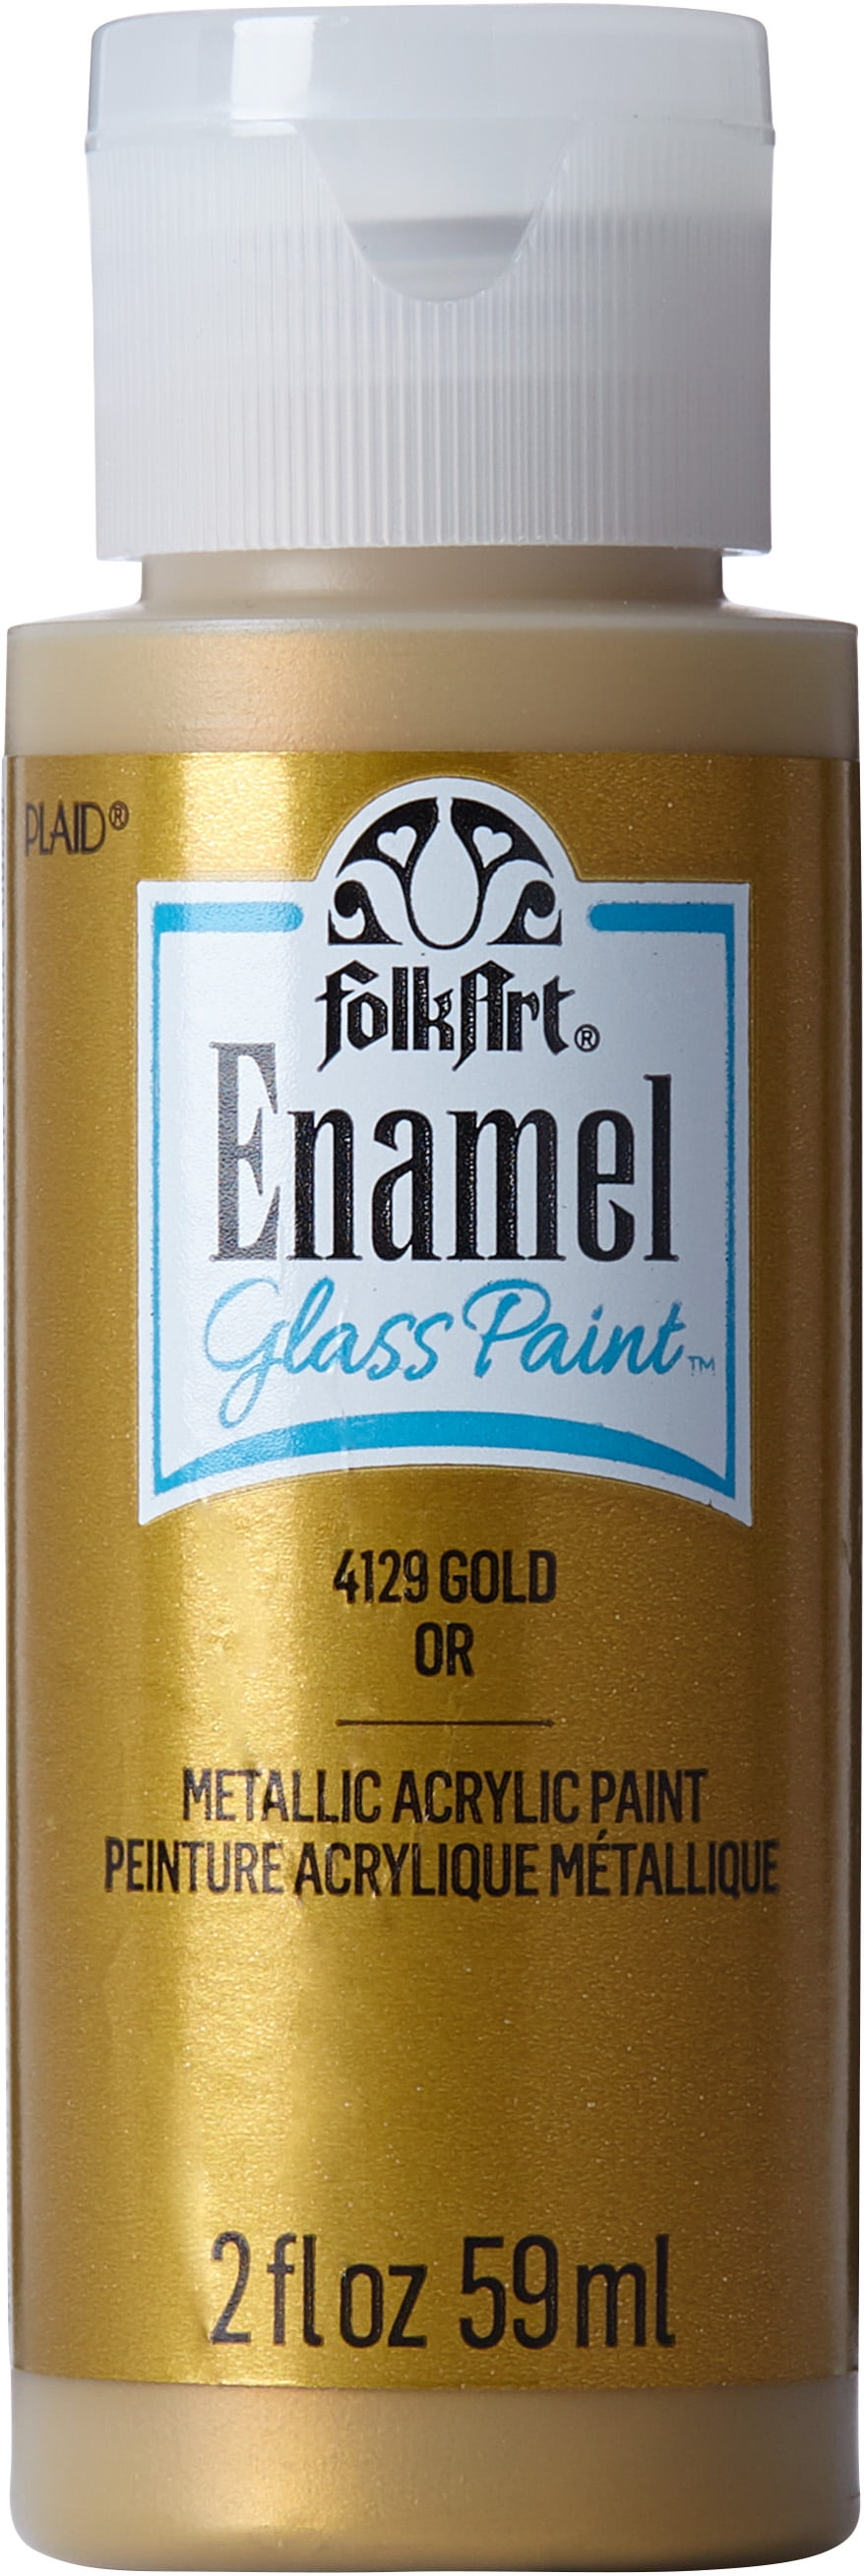 FolkArt Enamel Acrylic Craft Paint, Gloss Finish, Gold, 2 fl oz